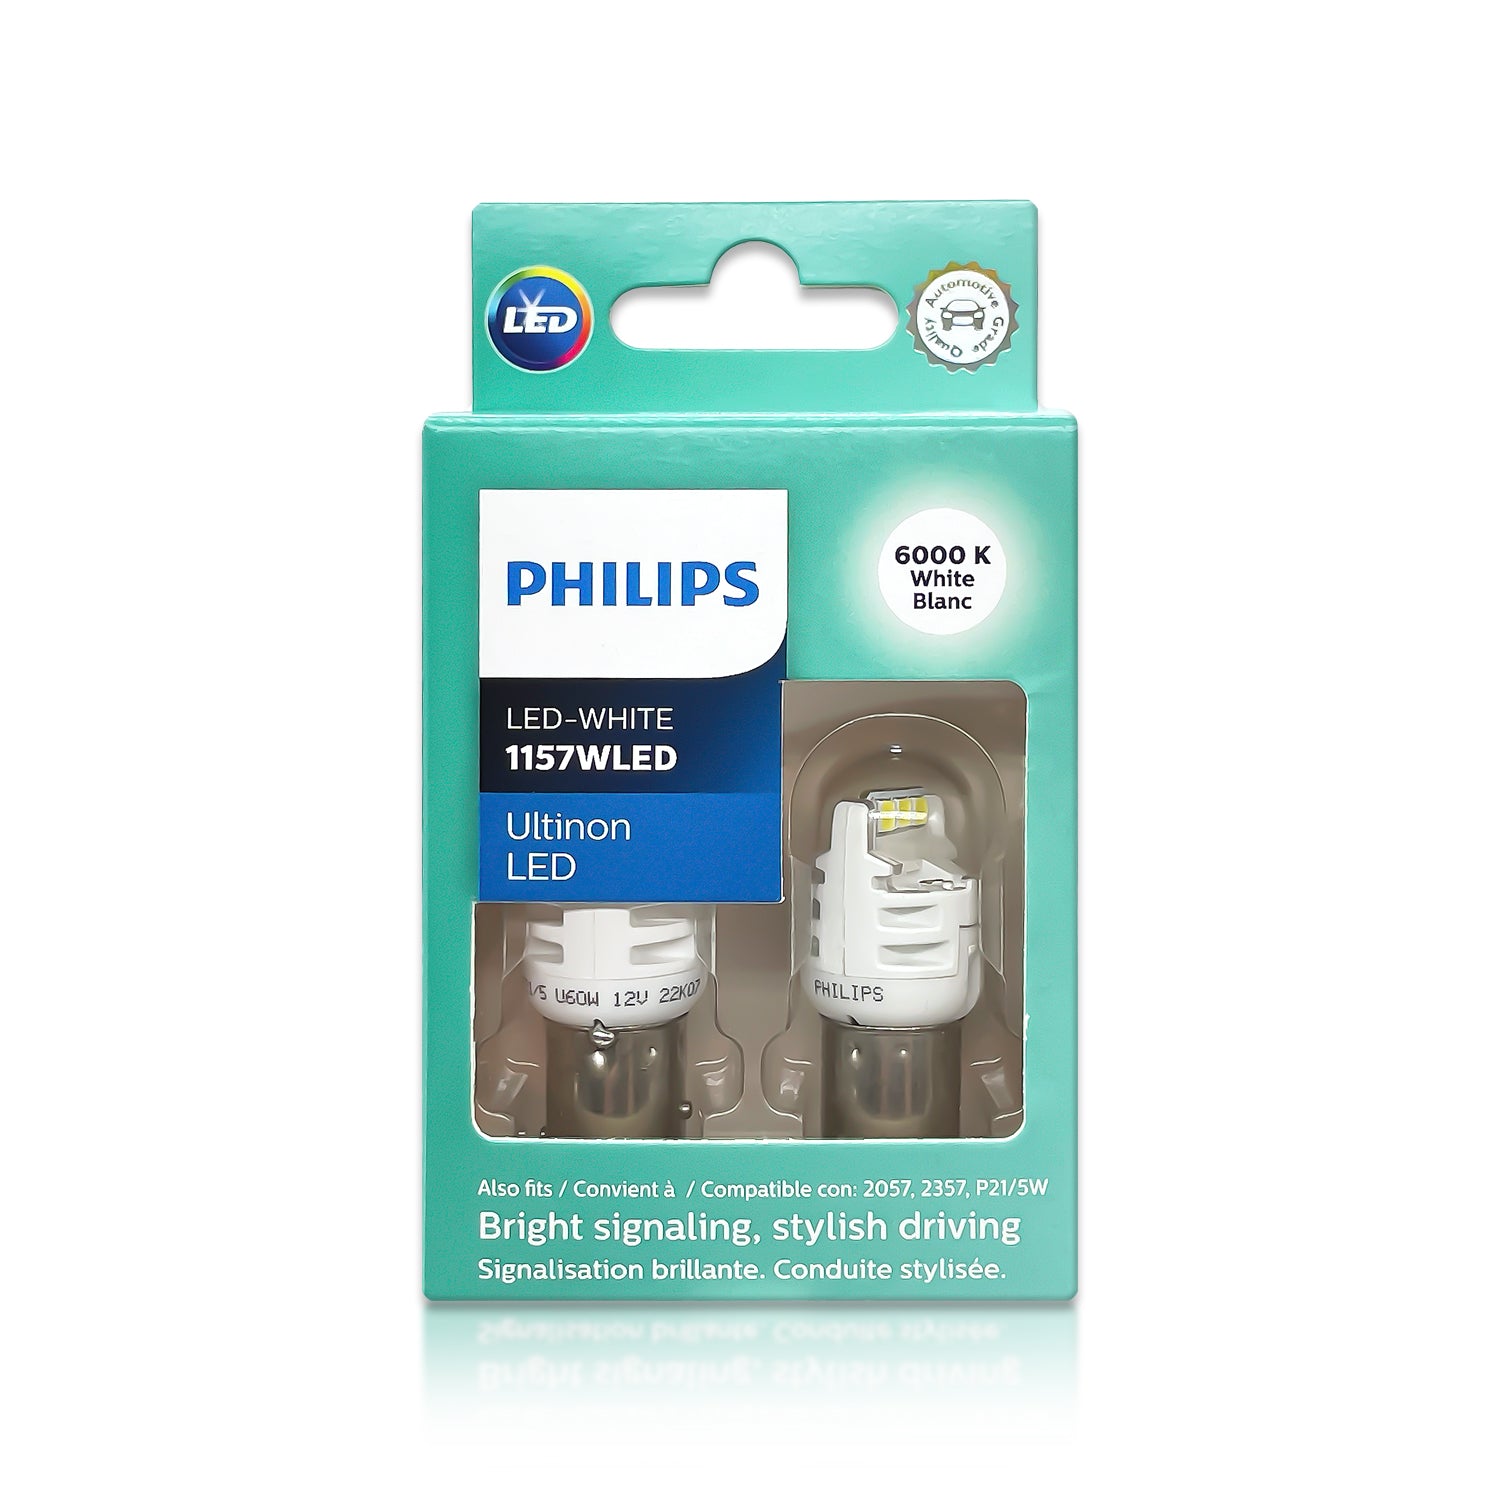 Ampoule W21/5W Philips 12V